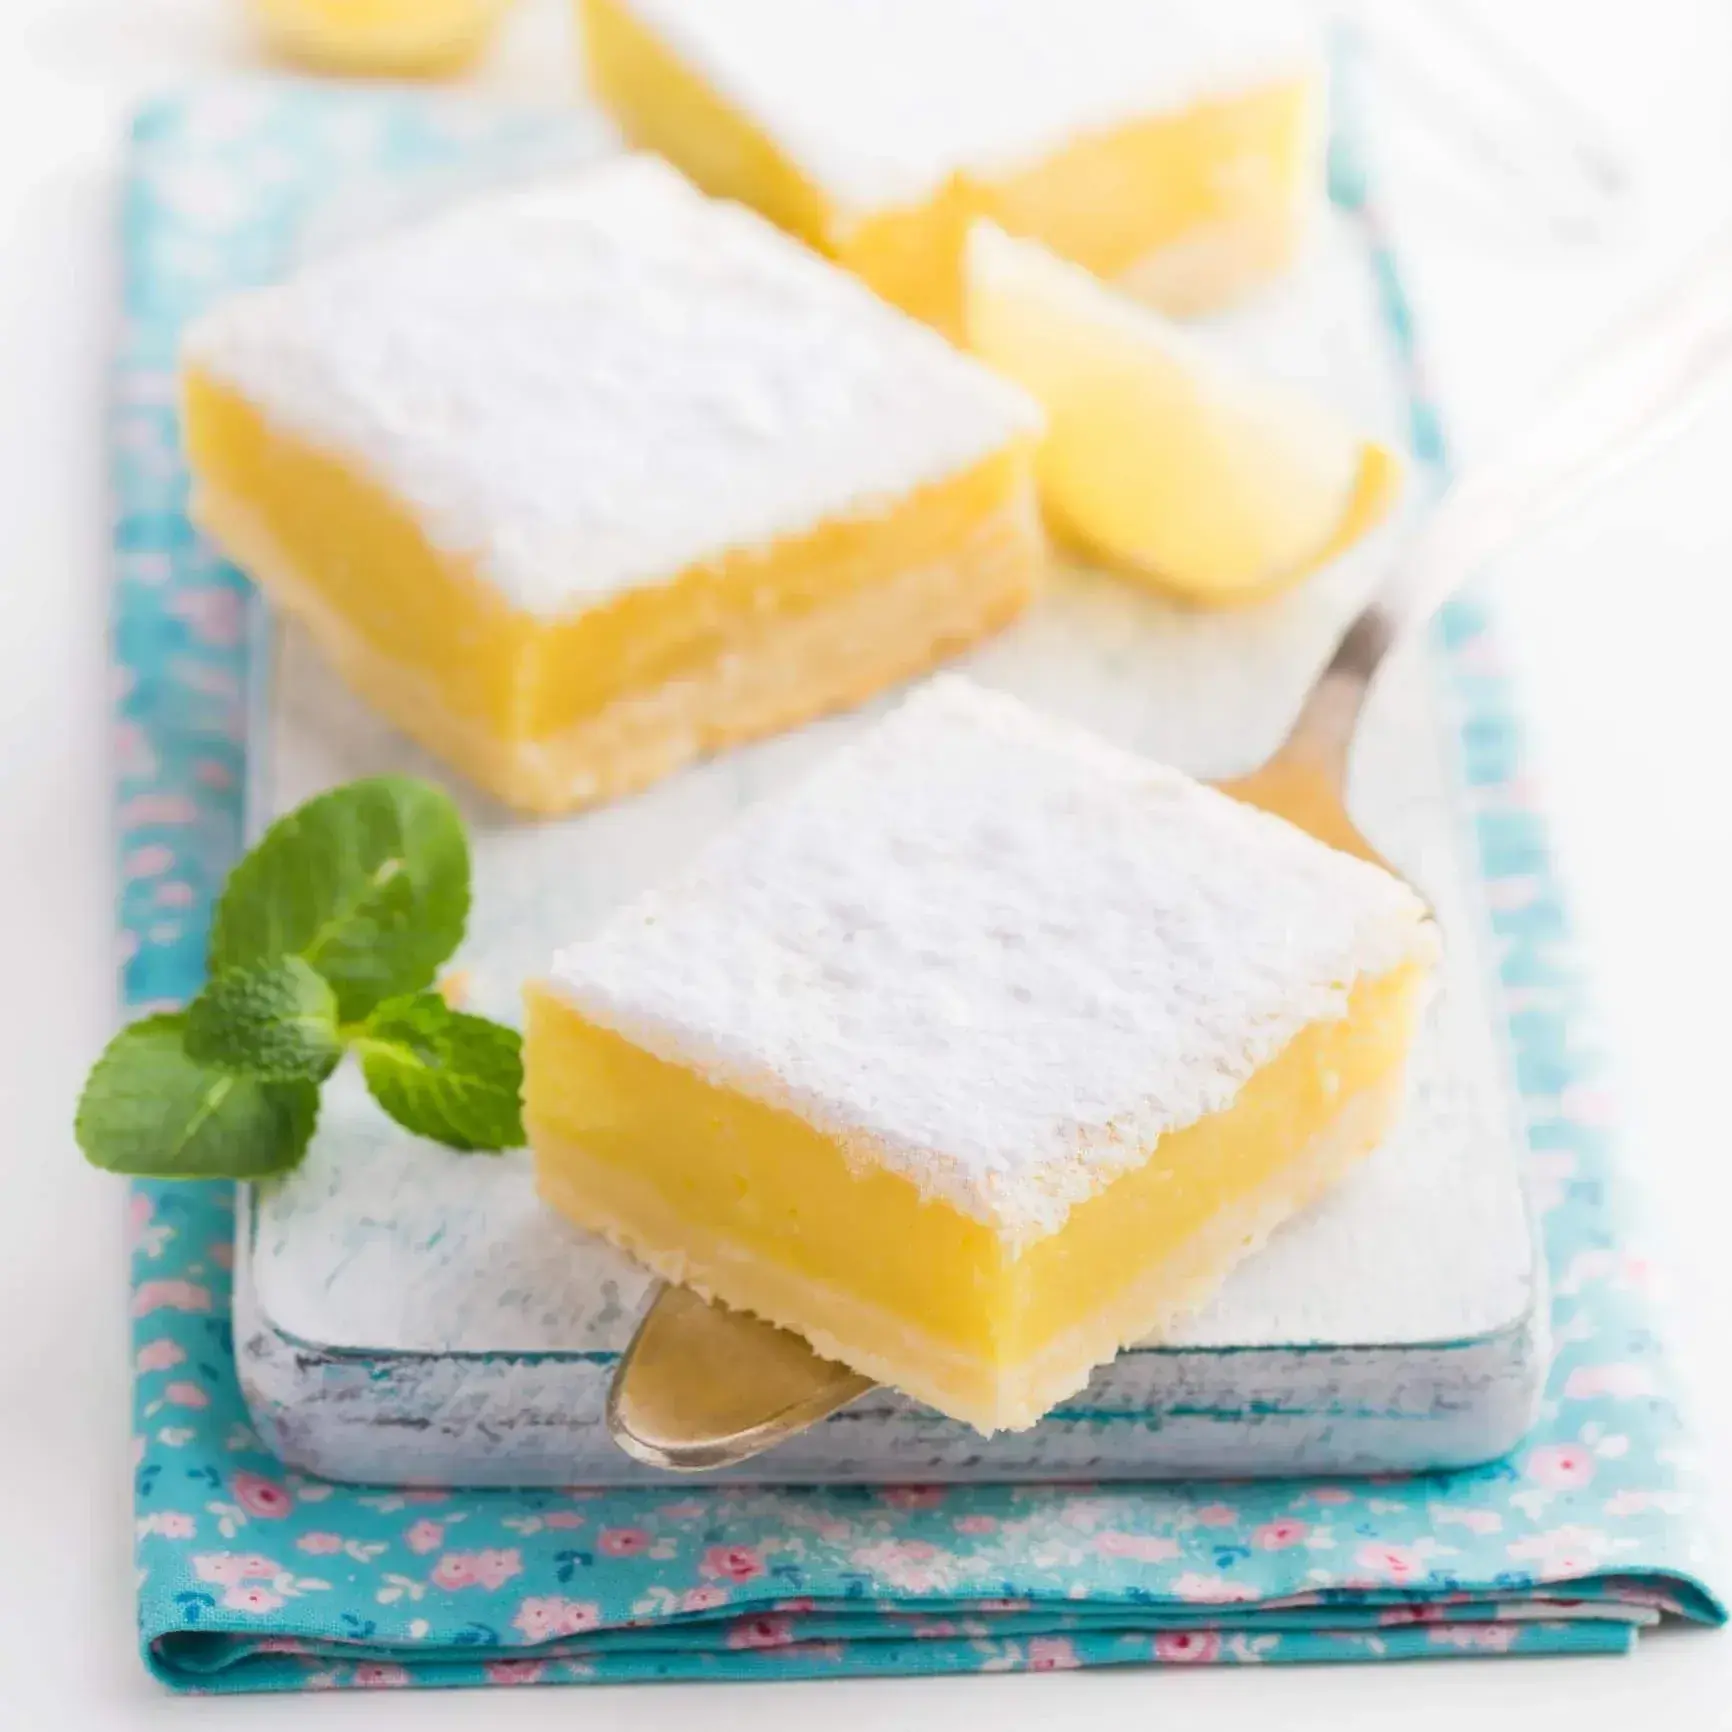 Lemon, almond and cranberry squaresdessert recipe image